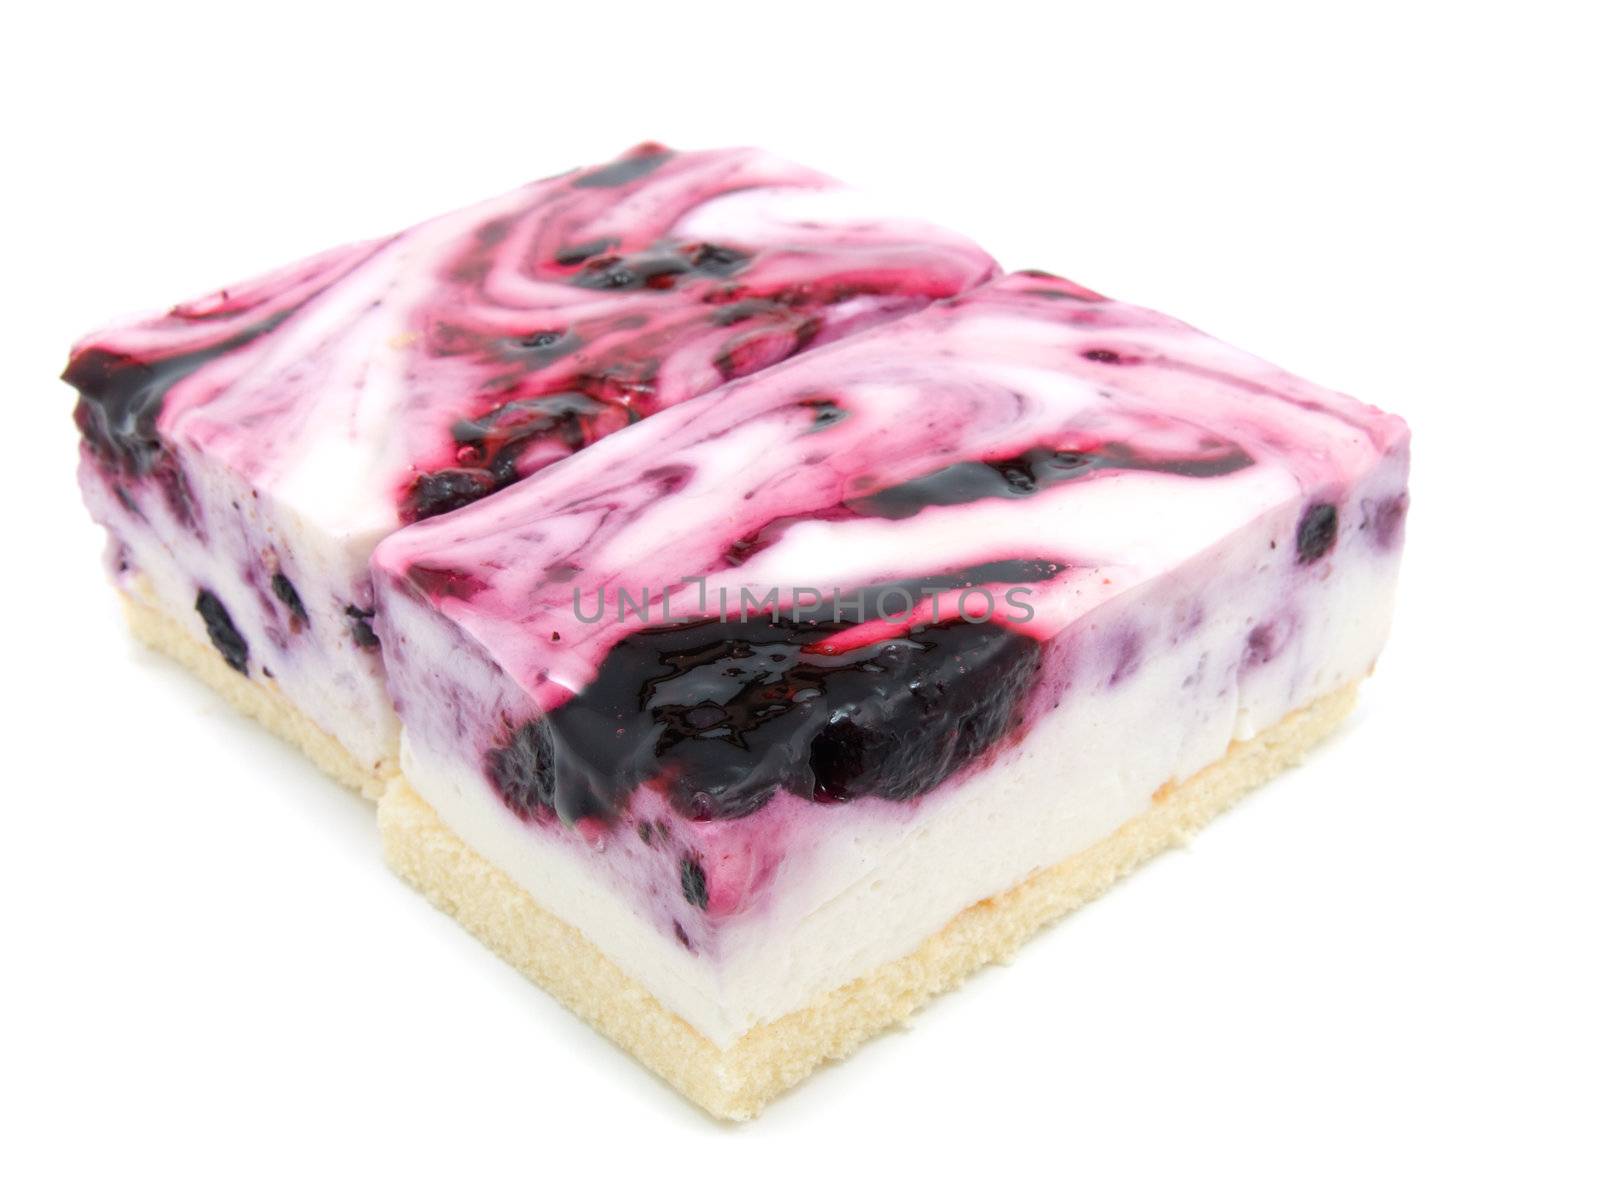 A slice of blueberry cheesecake  by motorolka